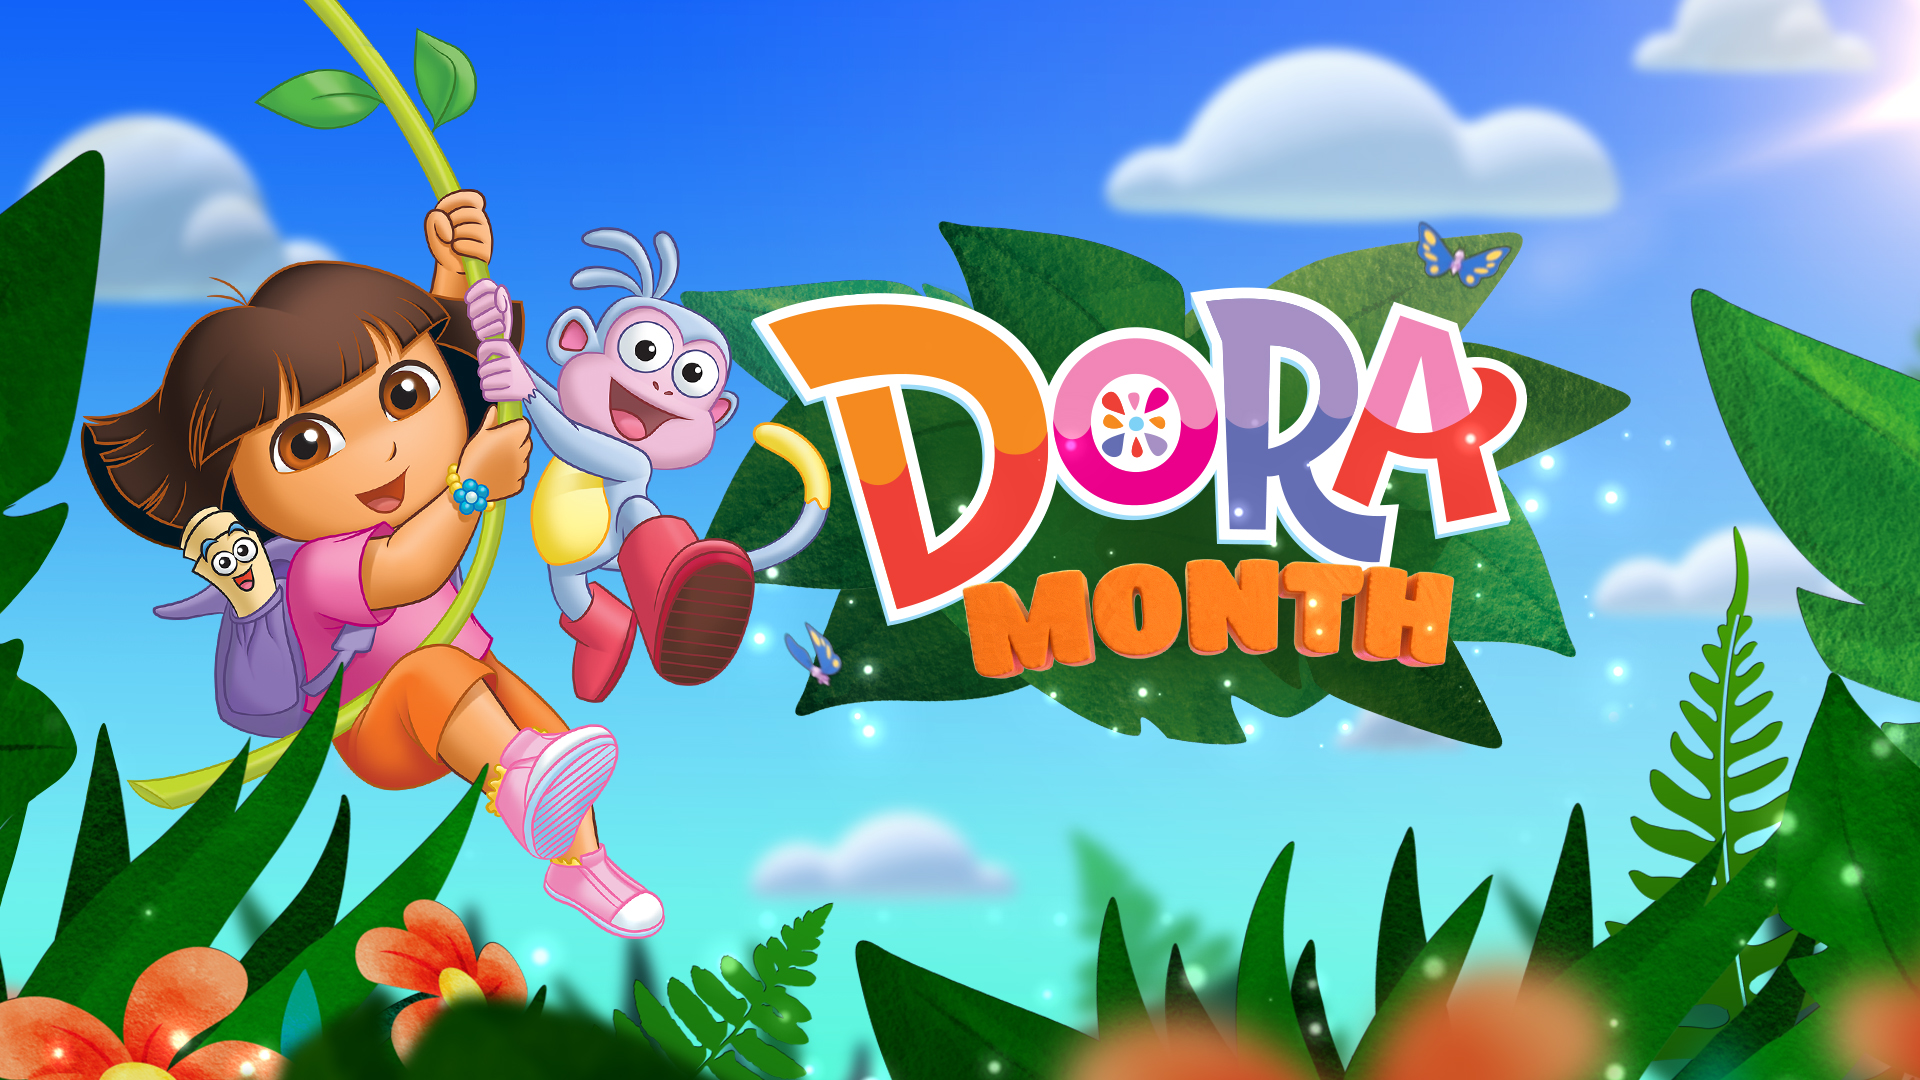 Nick Jr - Dora Month - Promo Package - Ben Yonda - Design + Direction